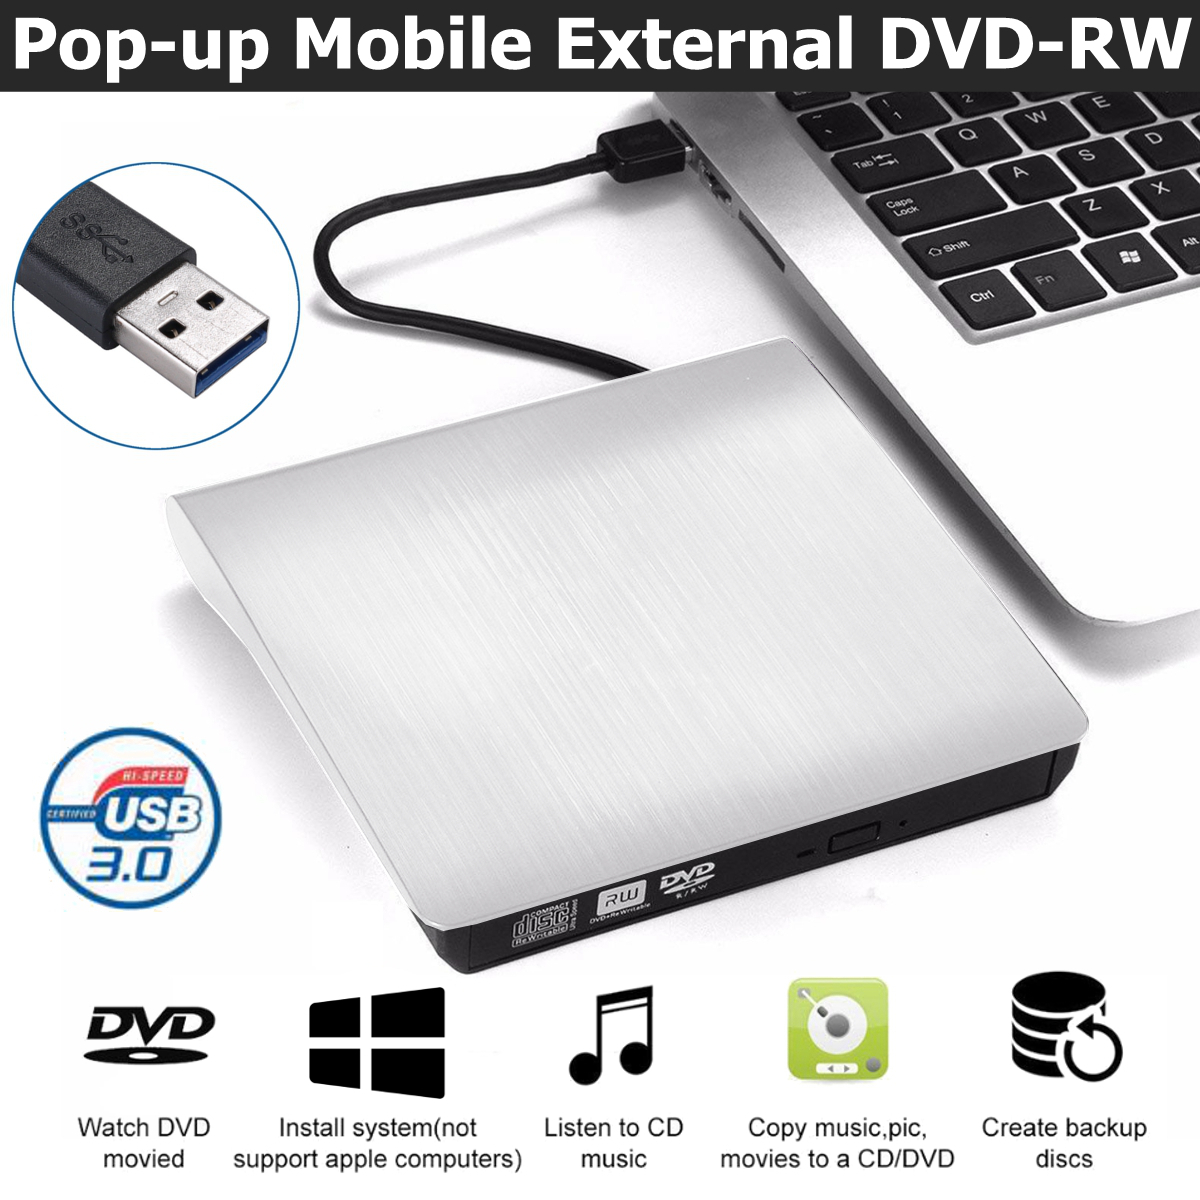 USB 3.0 Slim External DVD Optical Drive DVD-RW CD-RW Combo Drive Burner Reader Player 12